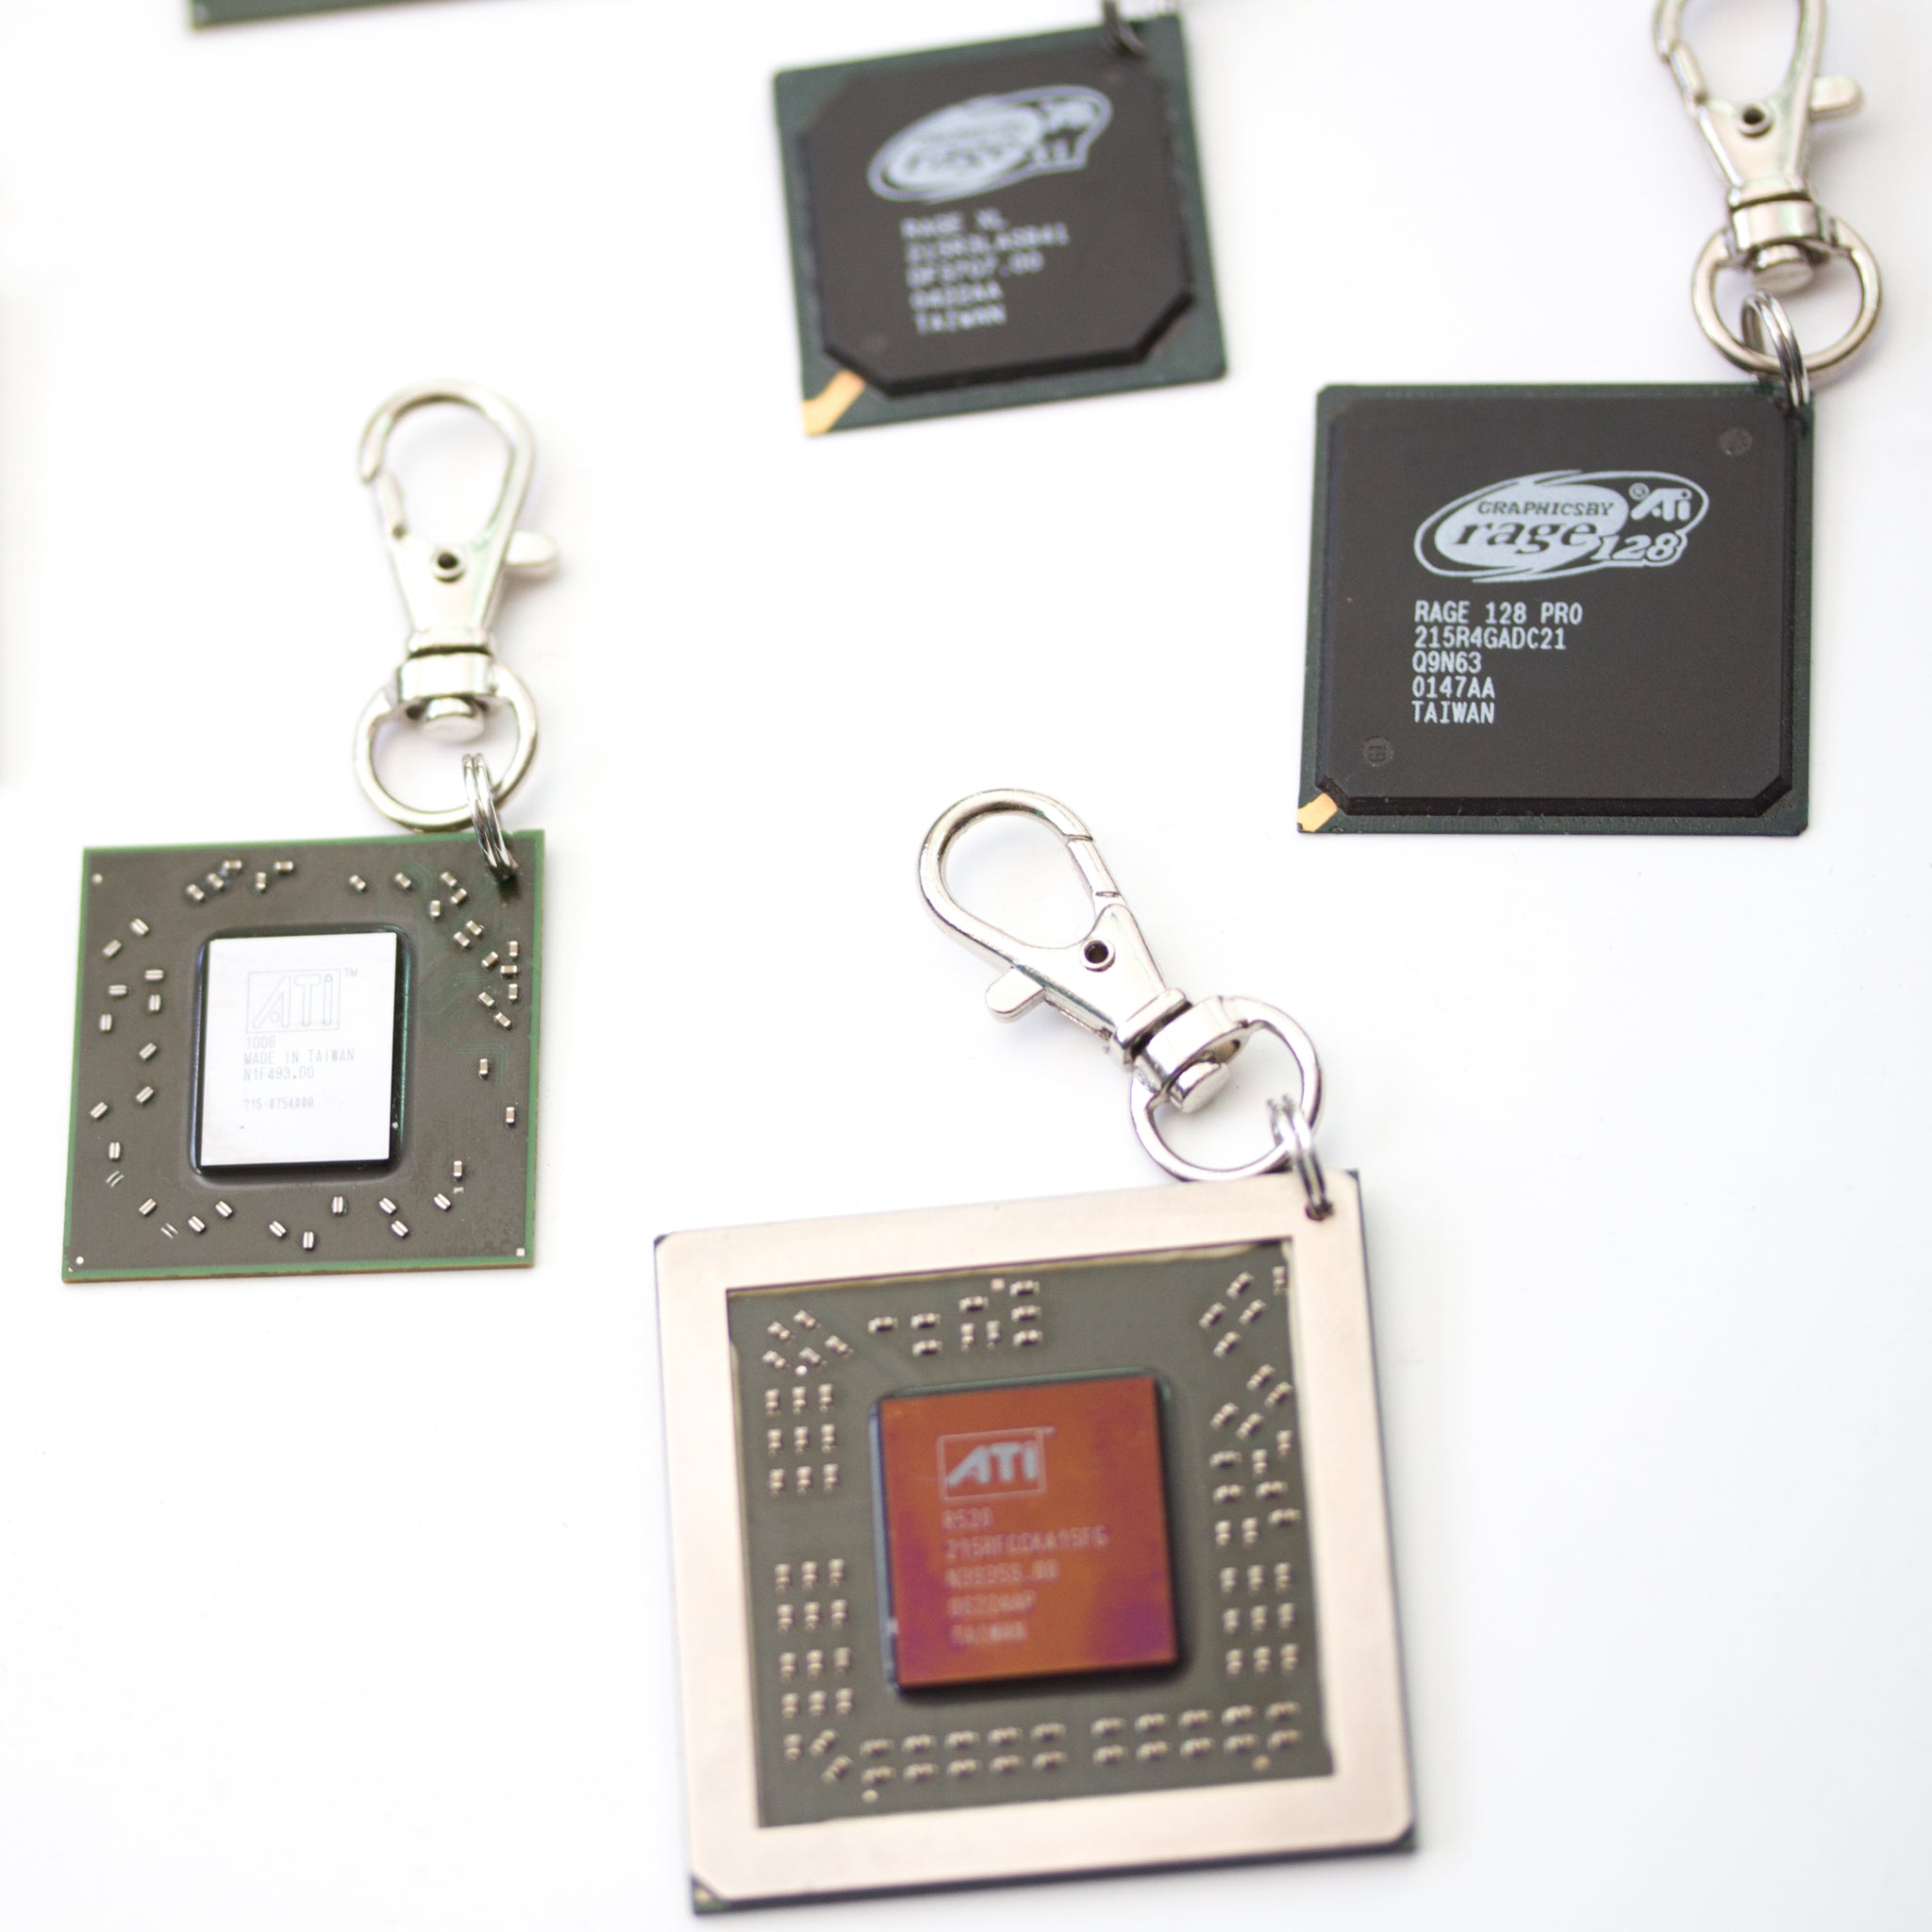 Chipset keychain, recycled computer keychain, ATI graphic processor, GPU